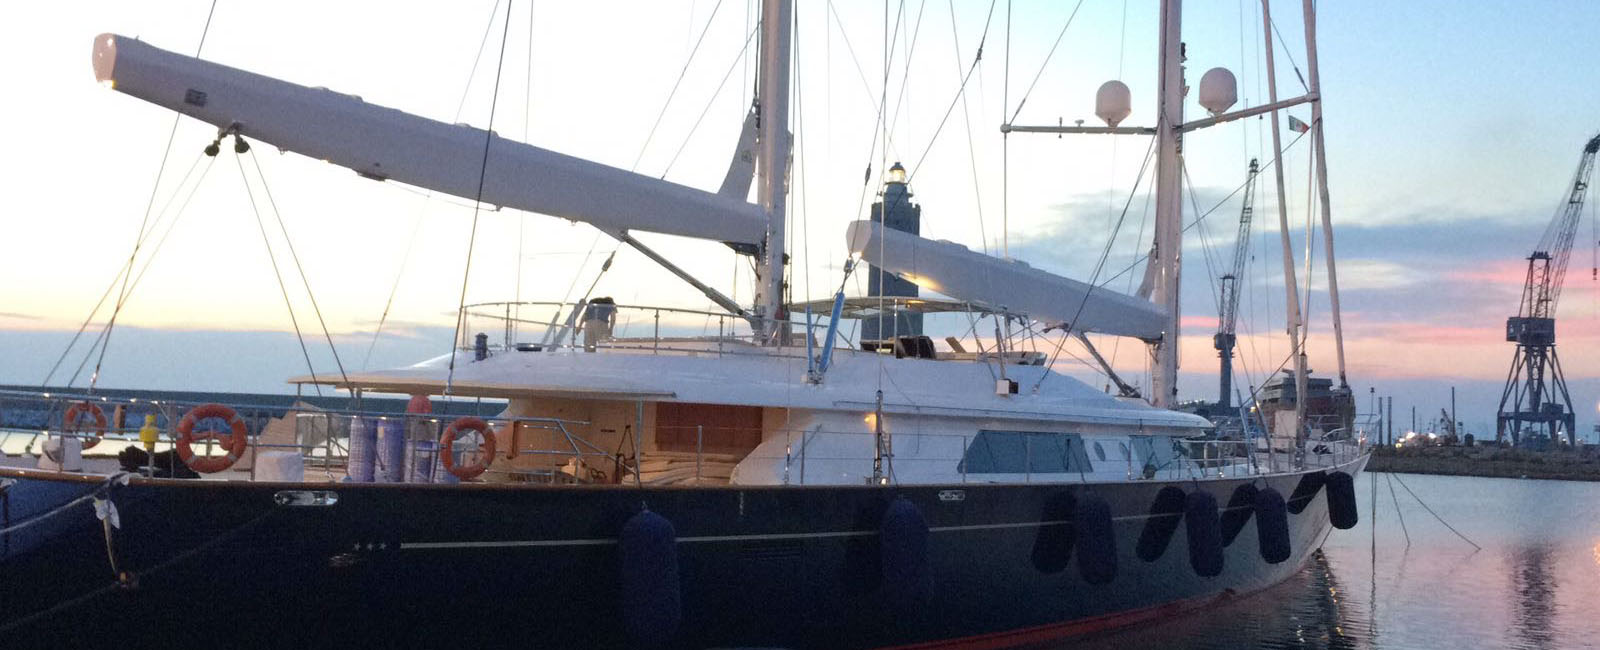 183ft_Perini_Navi_sailing_yacht